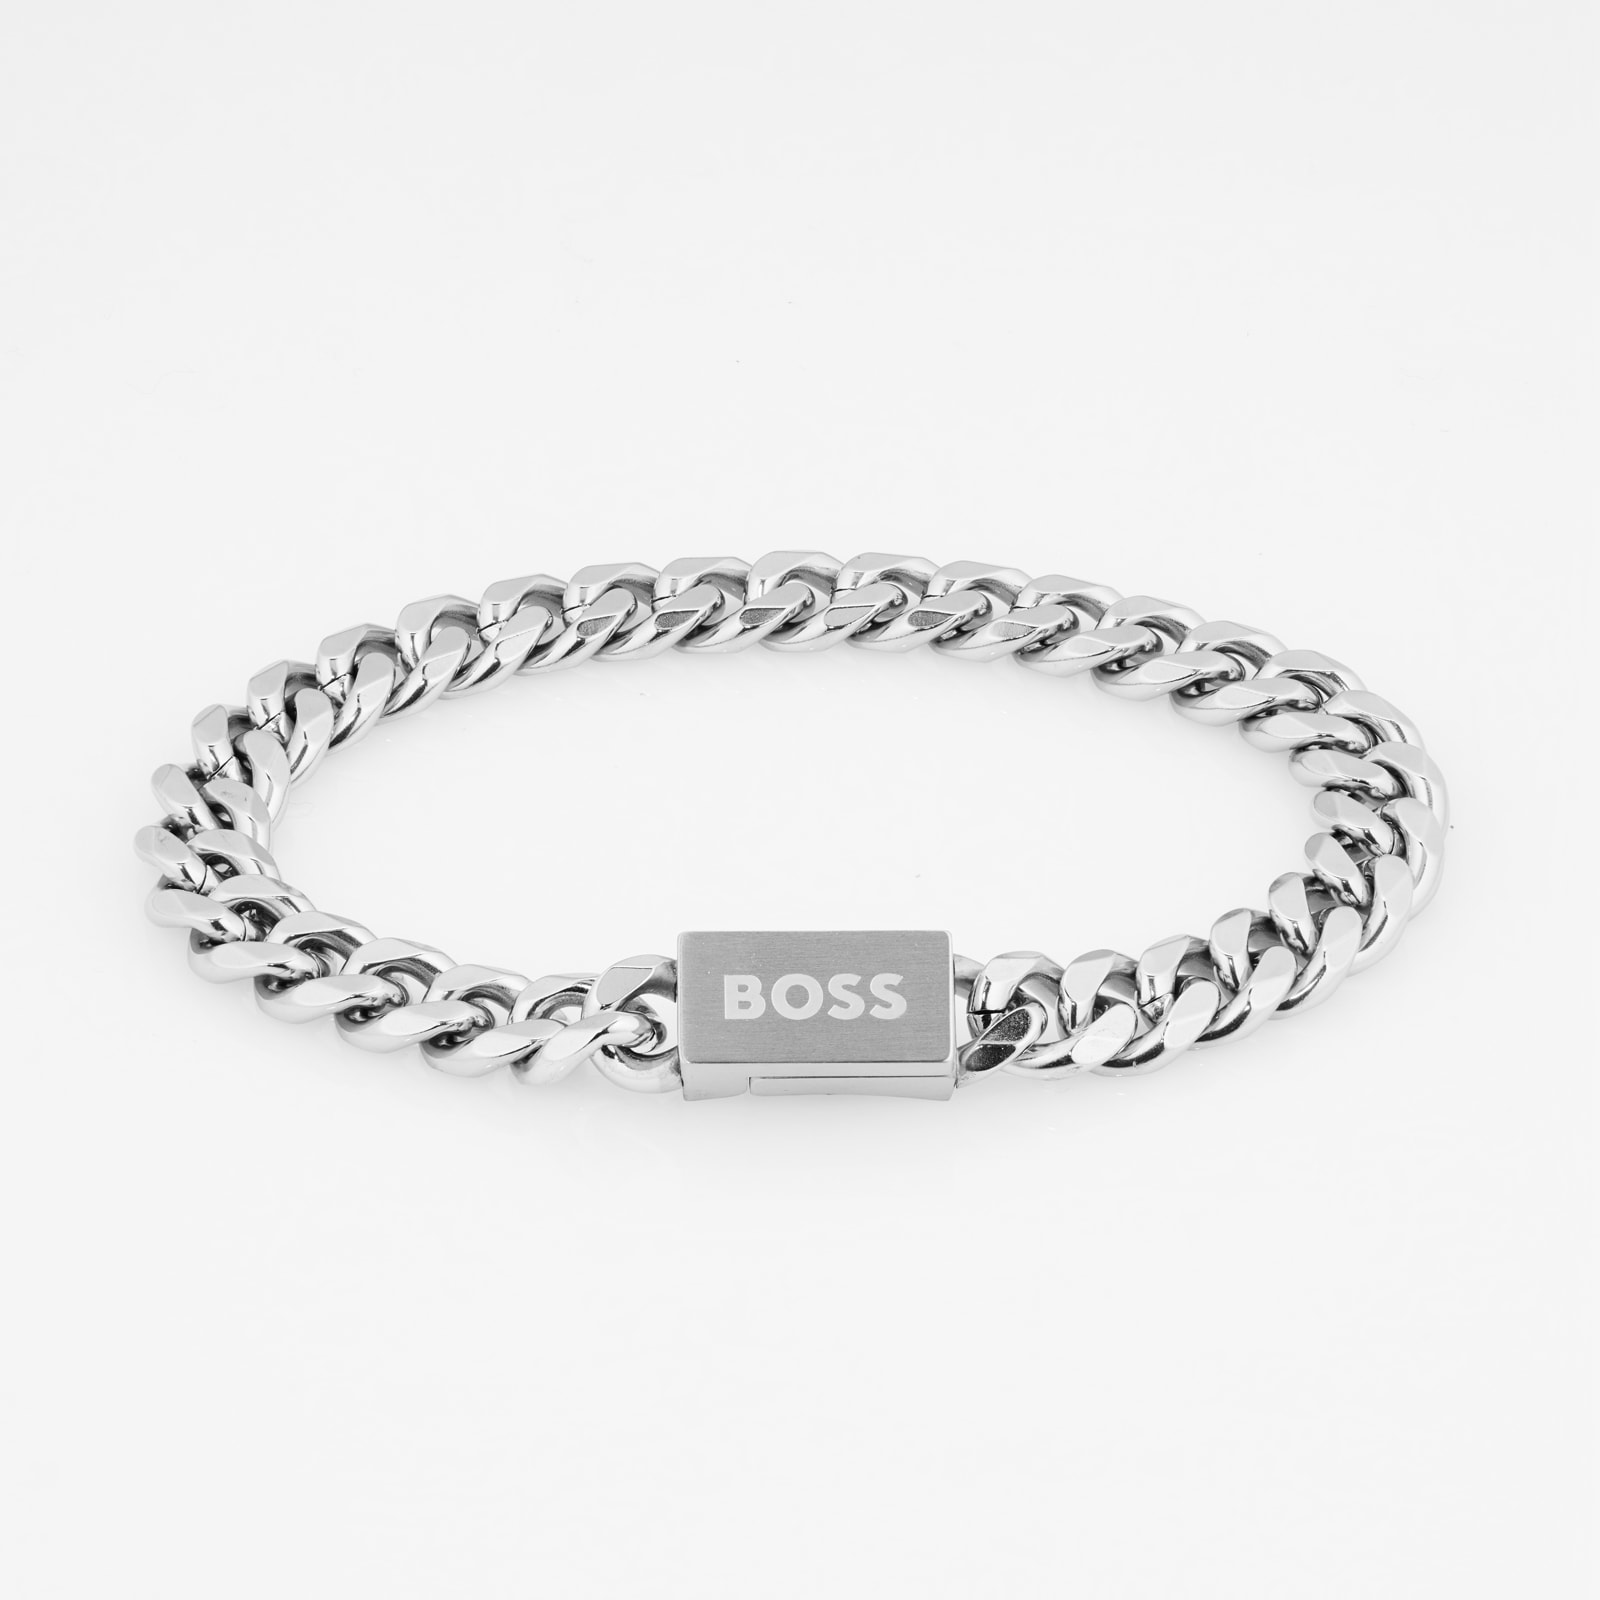 Discover more than 66 hugo boss bracelet super hot